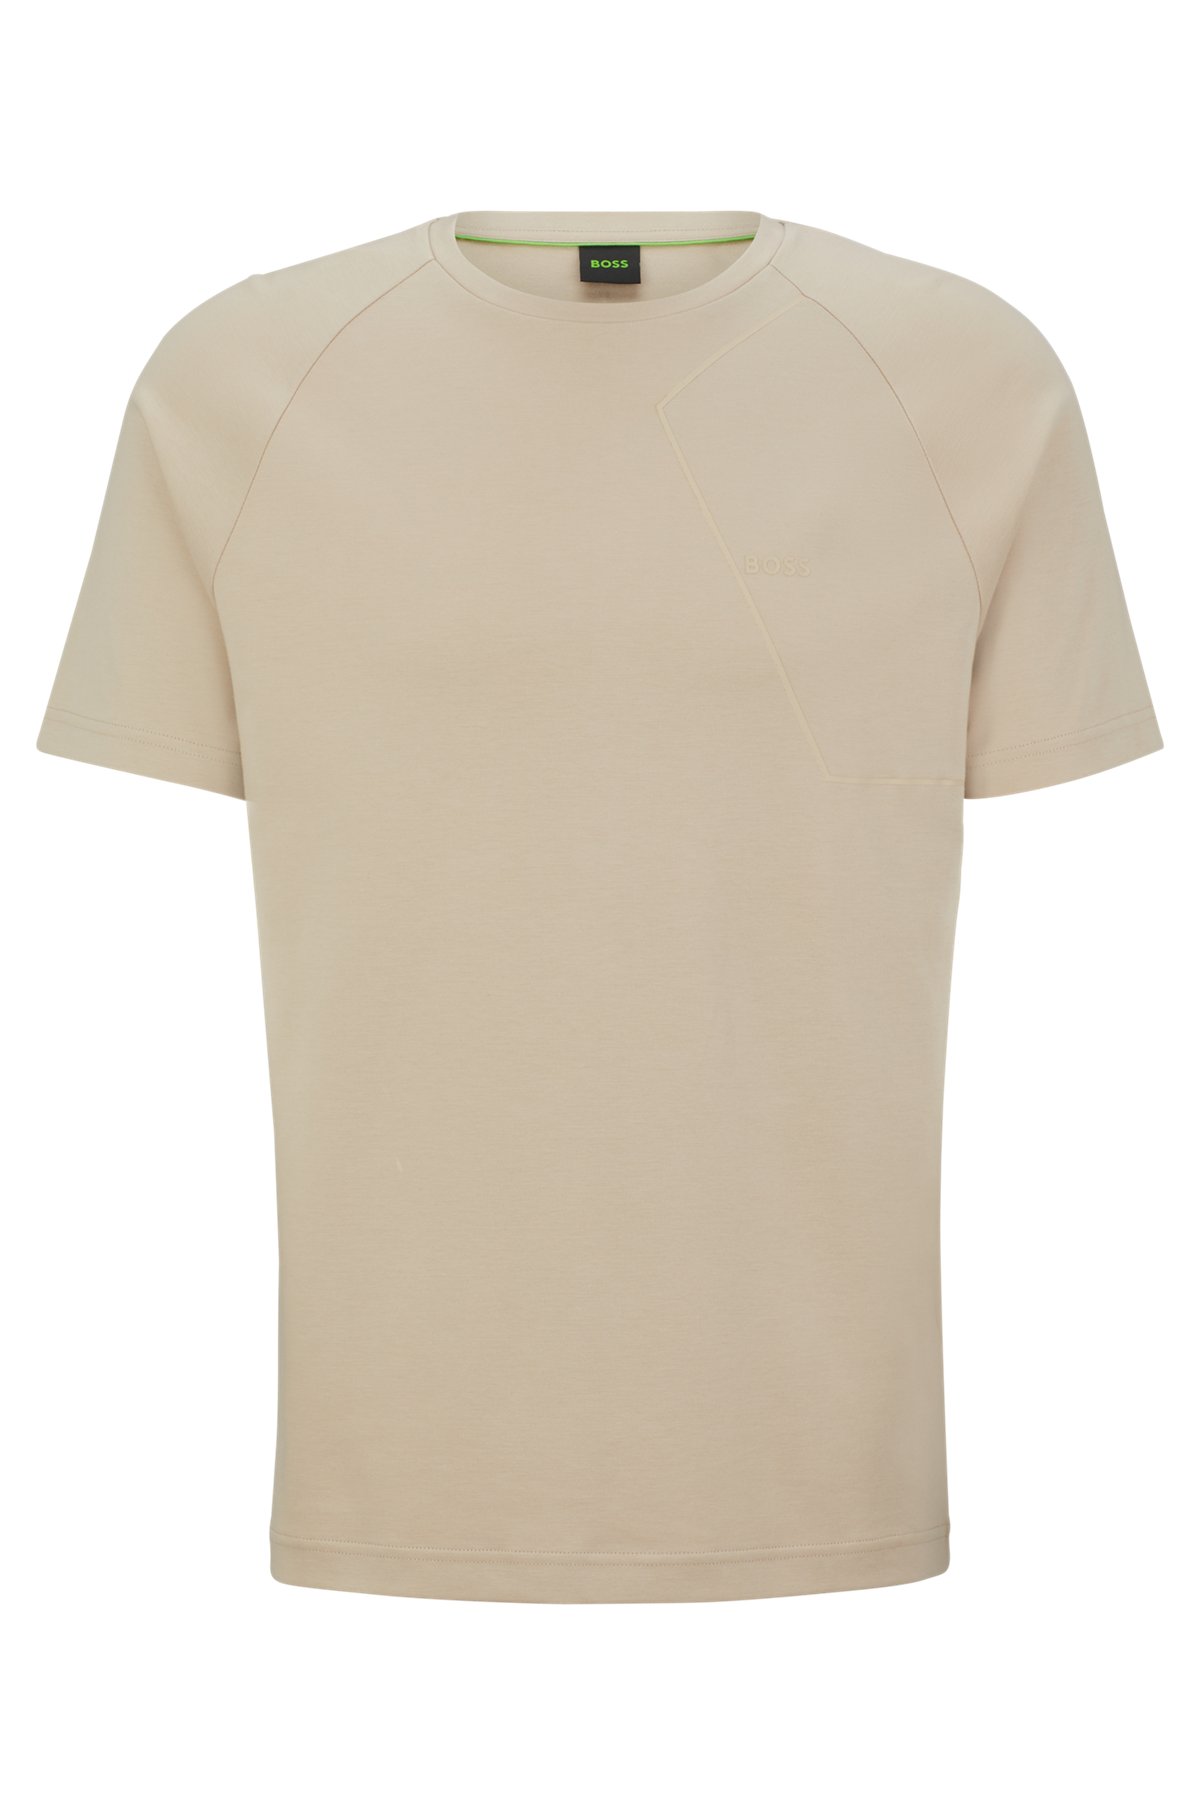 BOSS - Peppermint-finish cotton T-shirt with gloss-print artwork